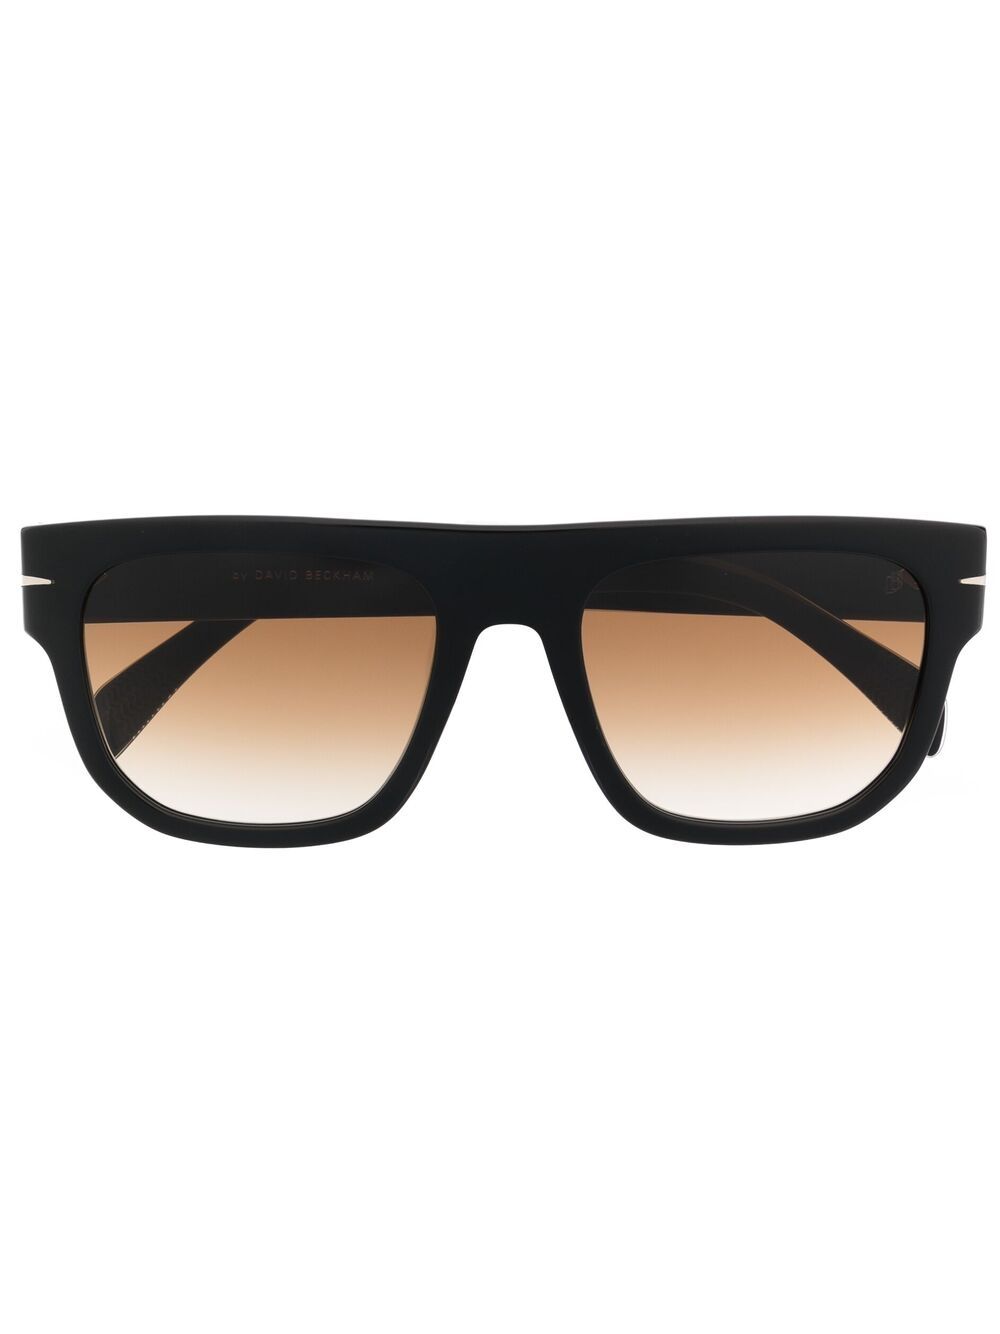 Eyewear By David Beckham Square-frame Flat-bar Sunglsses In Black